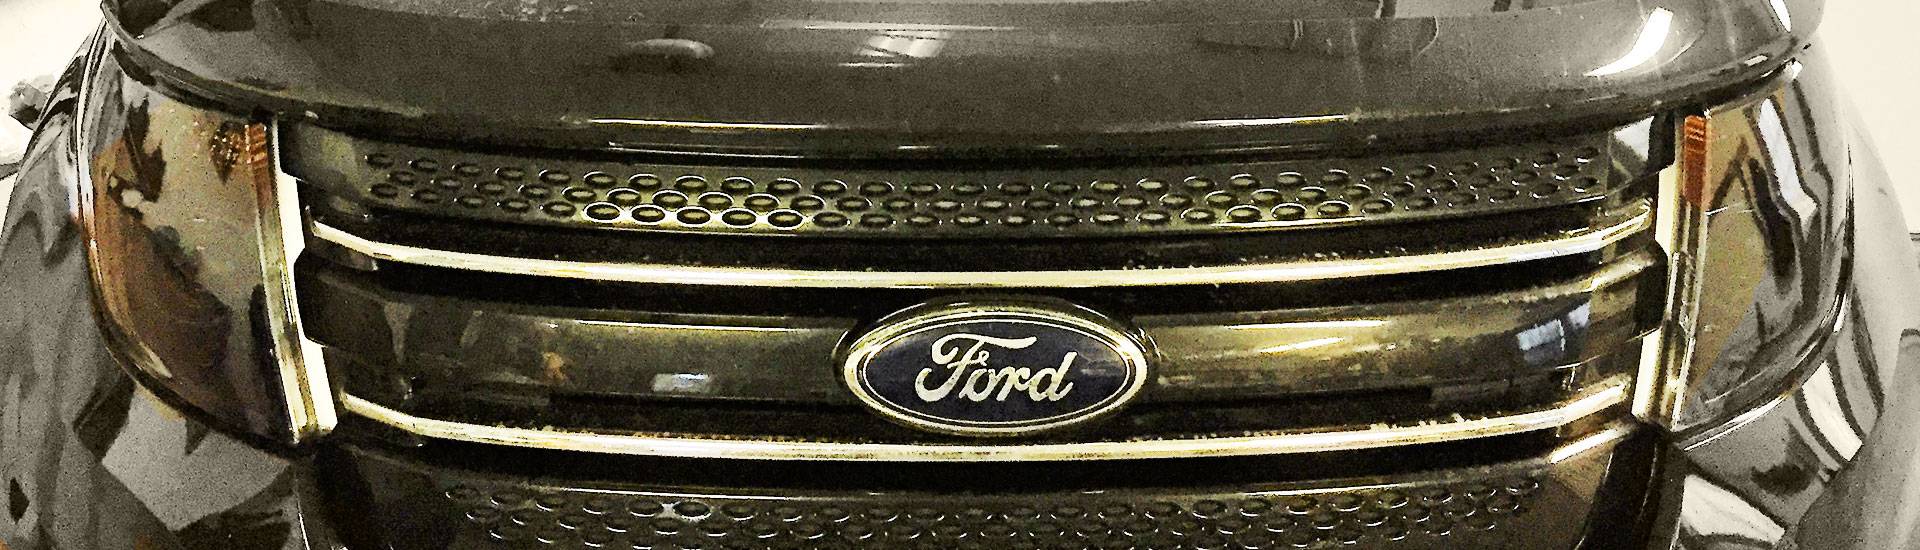 Ford Explorer Headlight Tint Covers